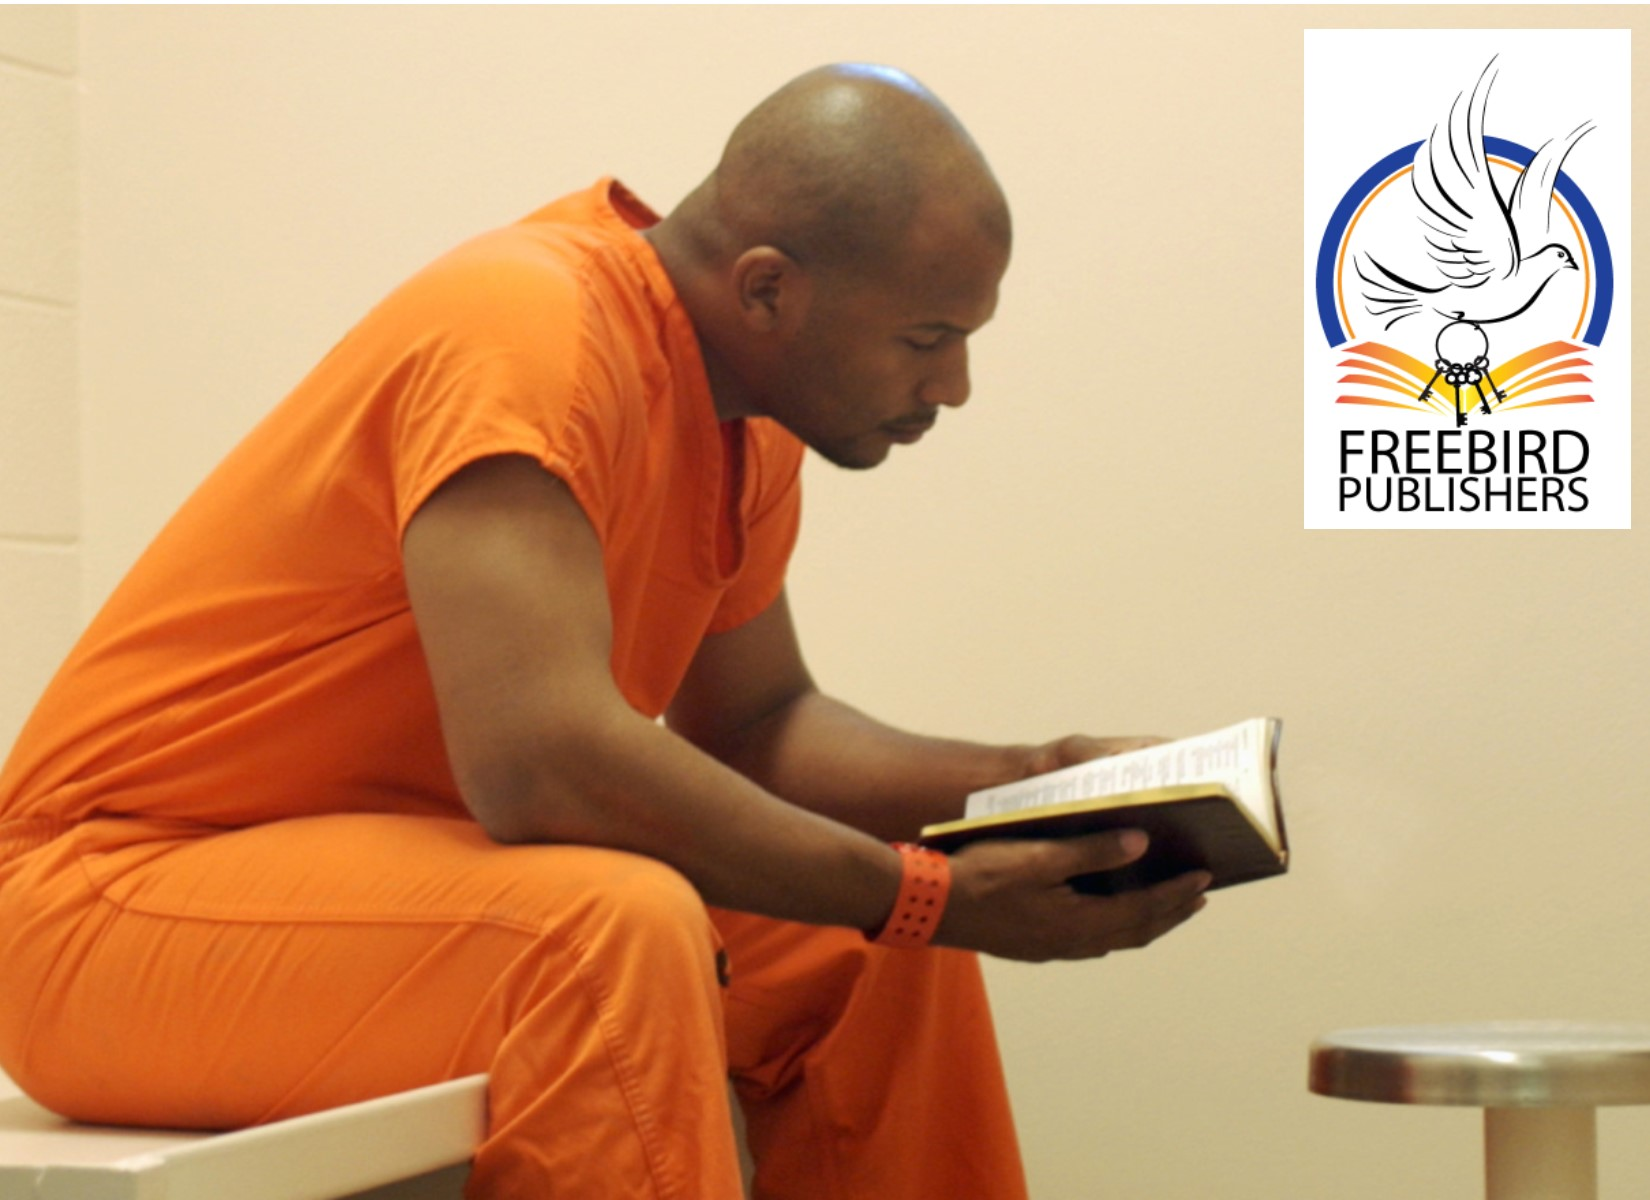 Inmate reading Freebird Publishers Book'